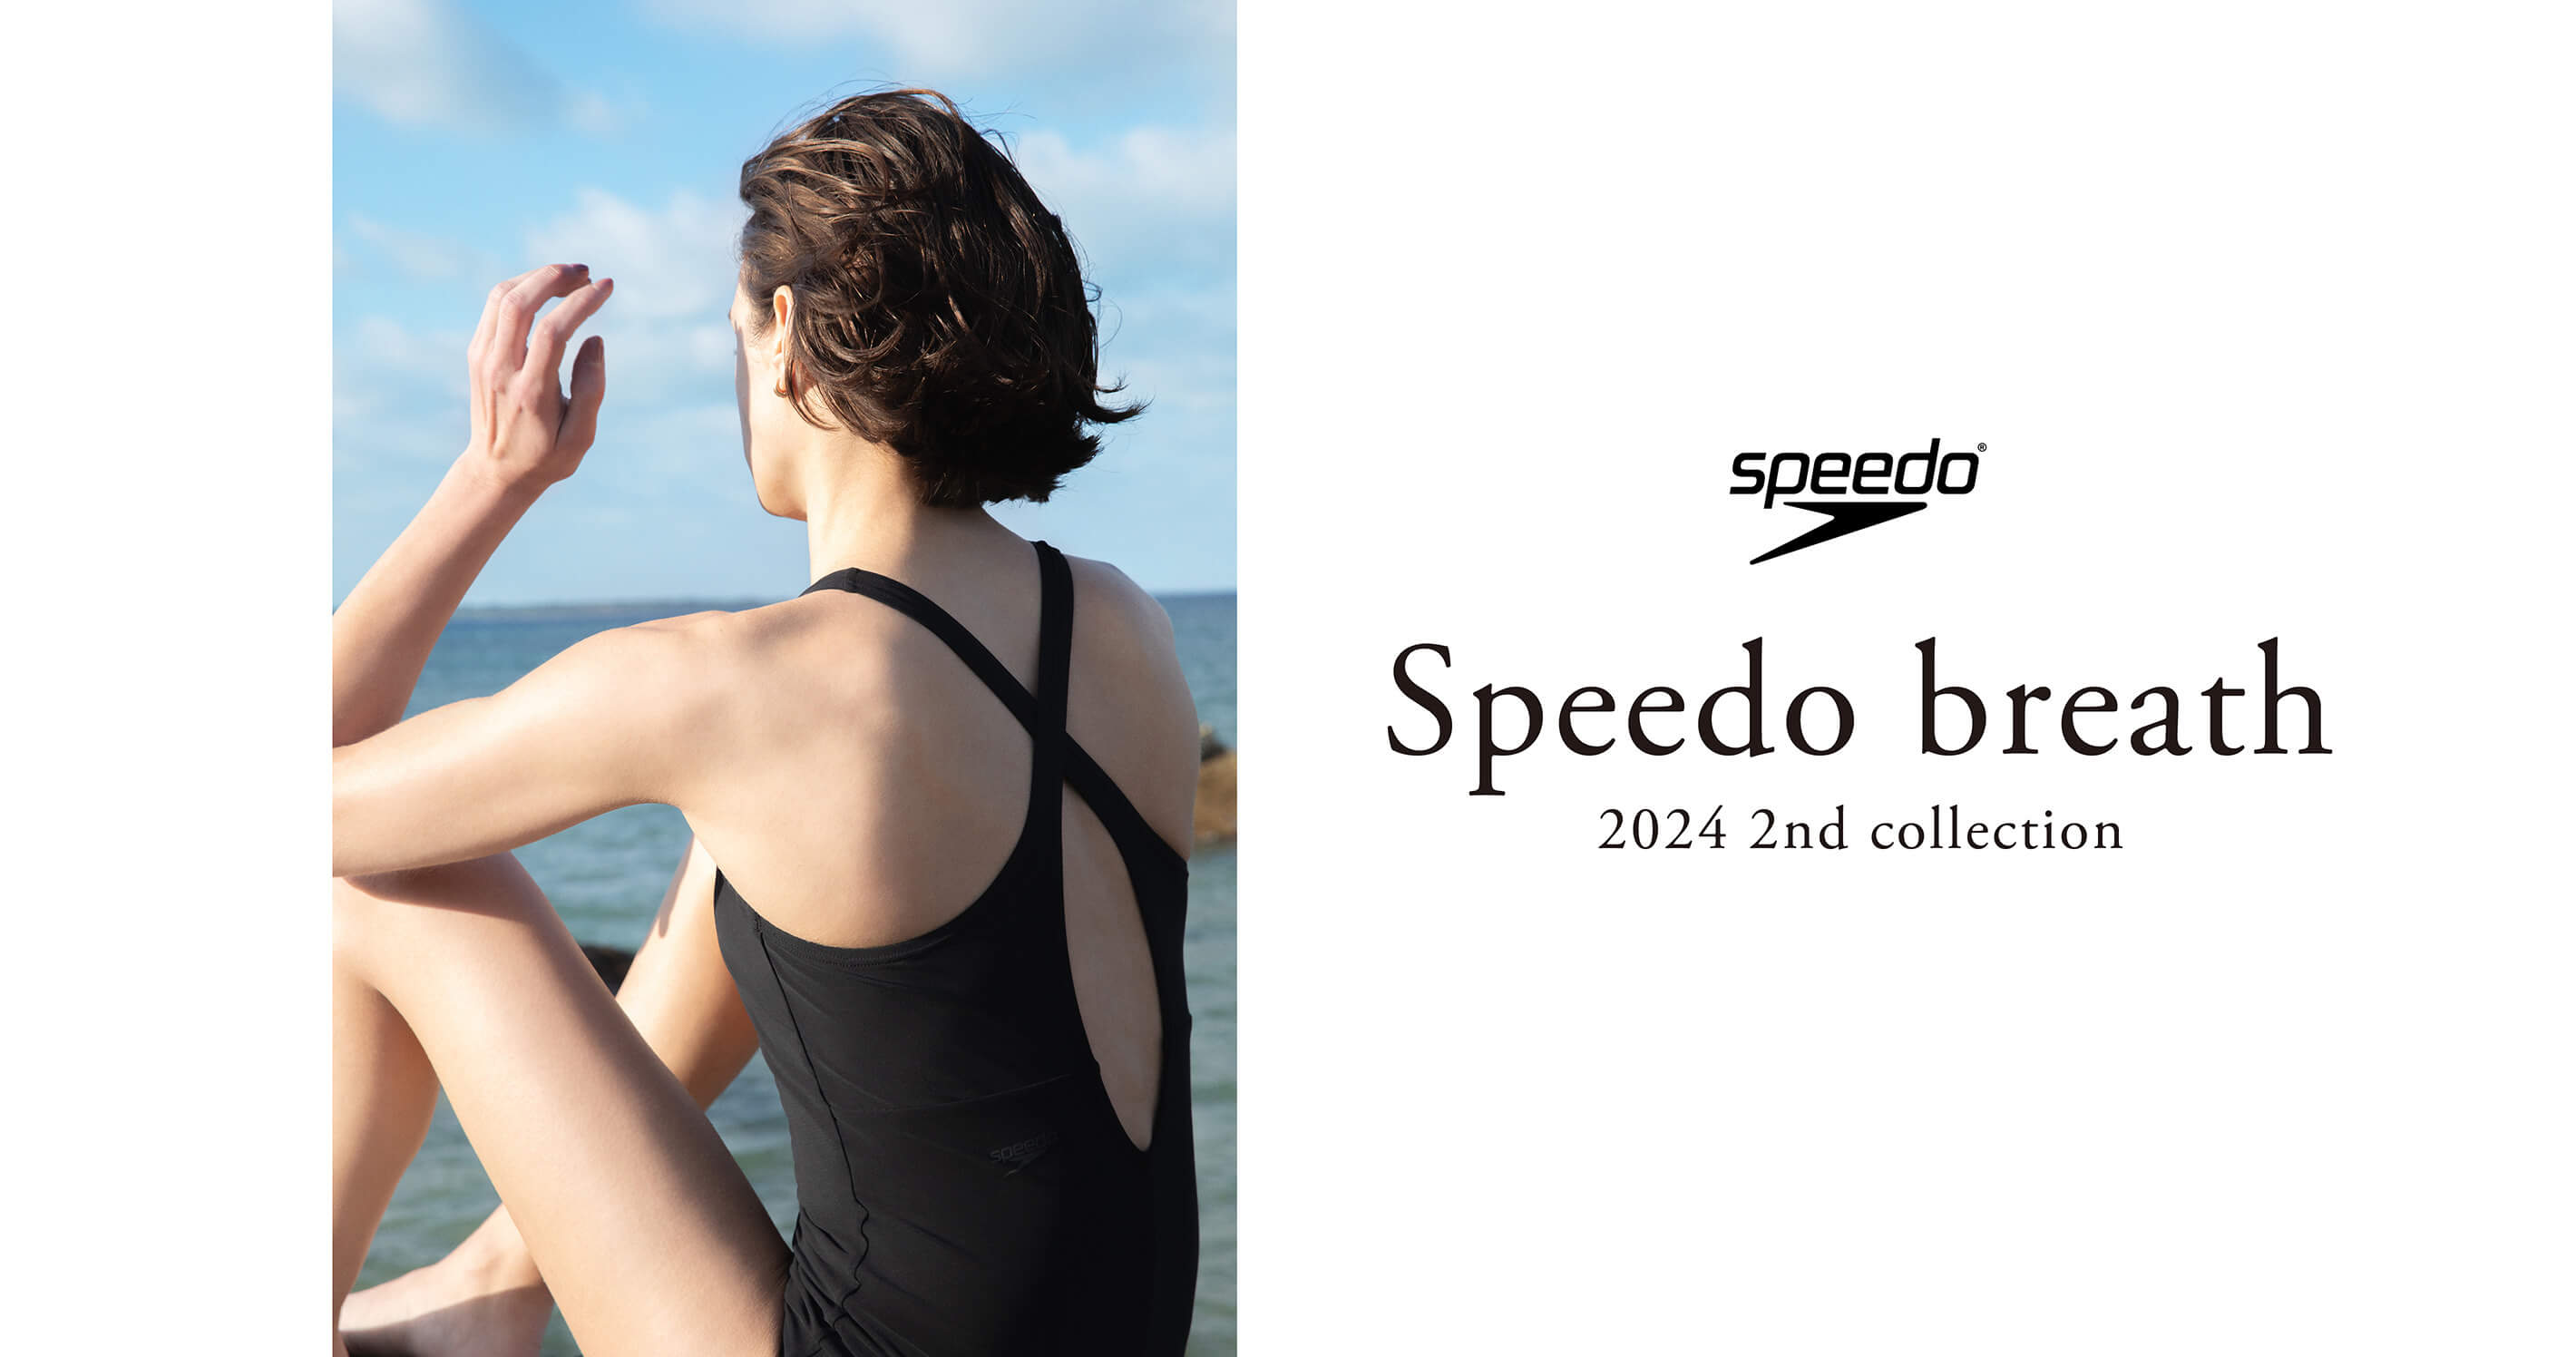 Speedo - スピードブランドサイト